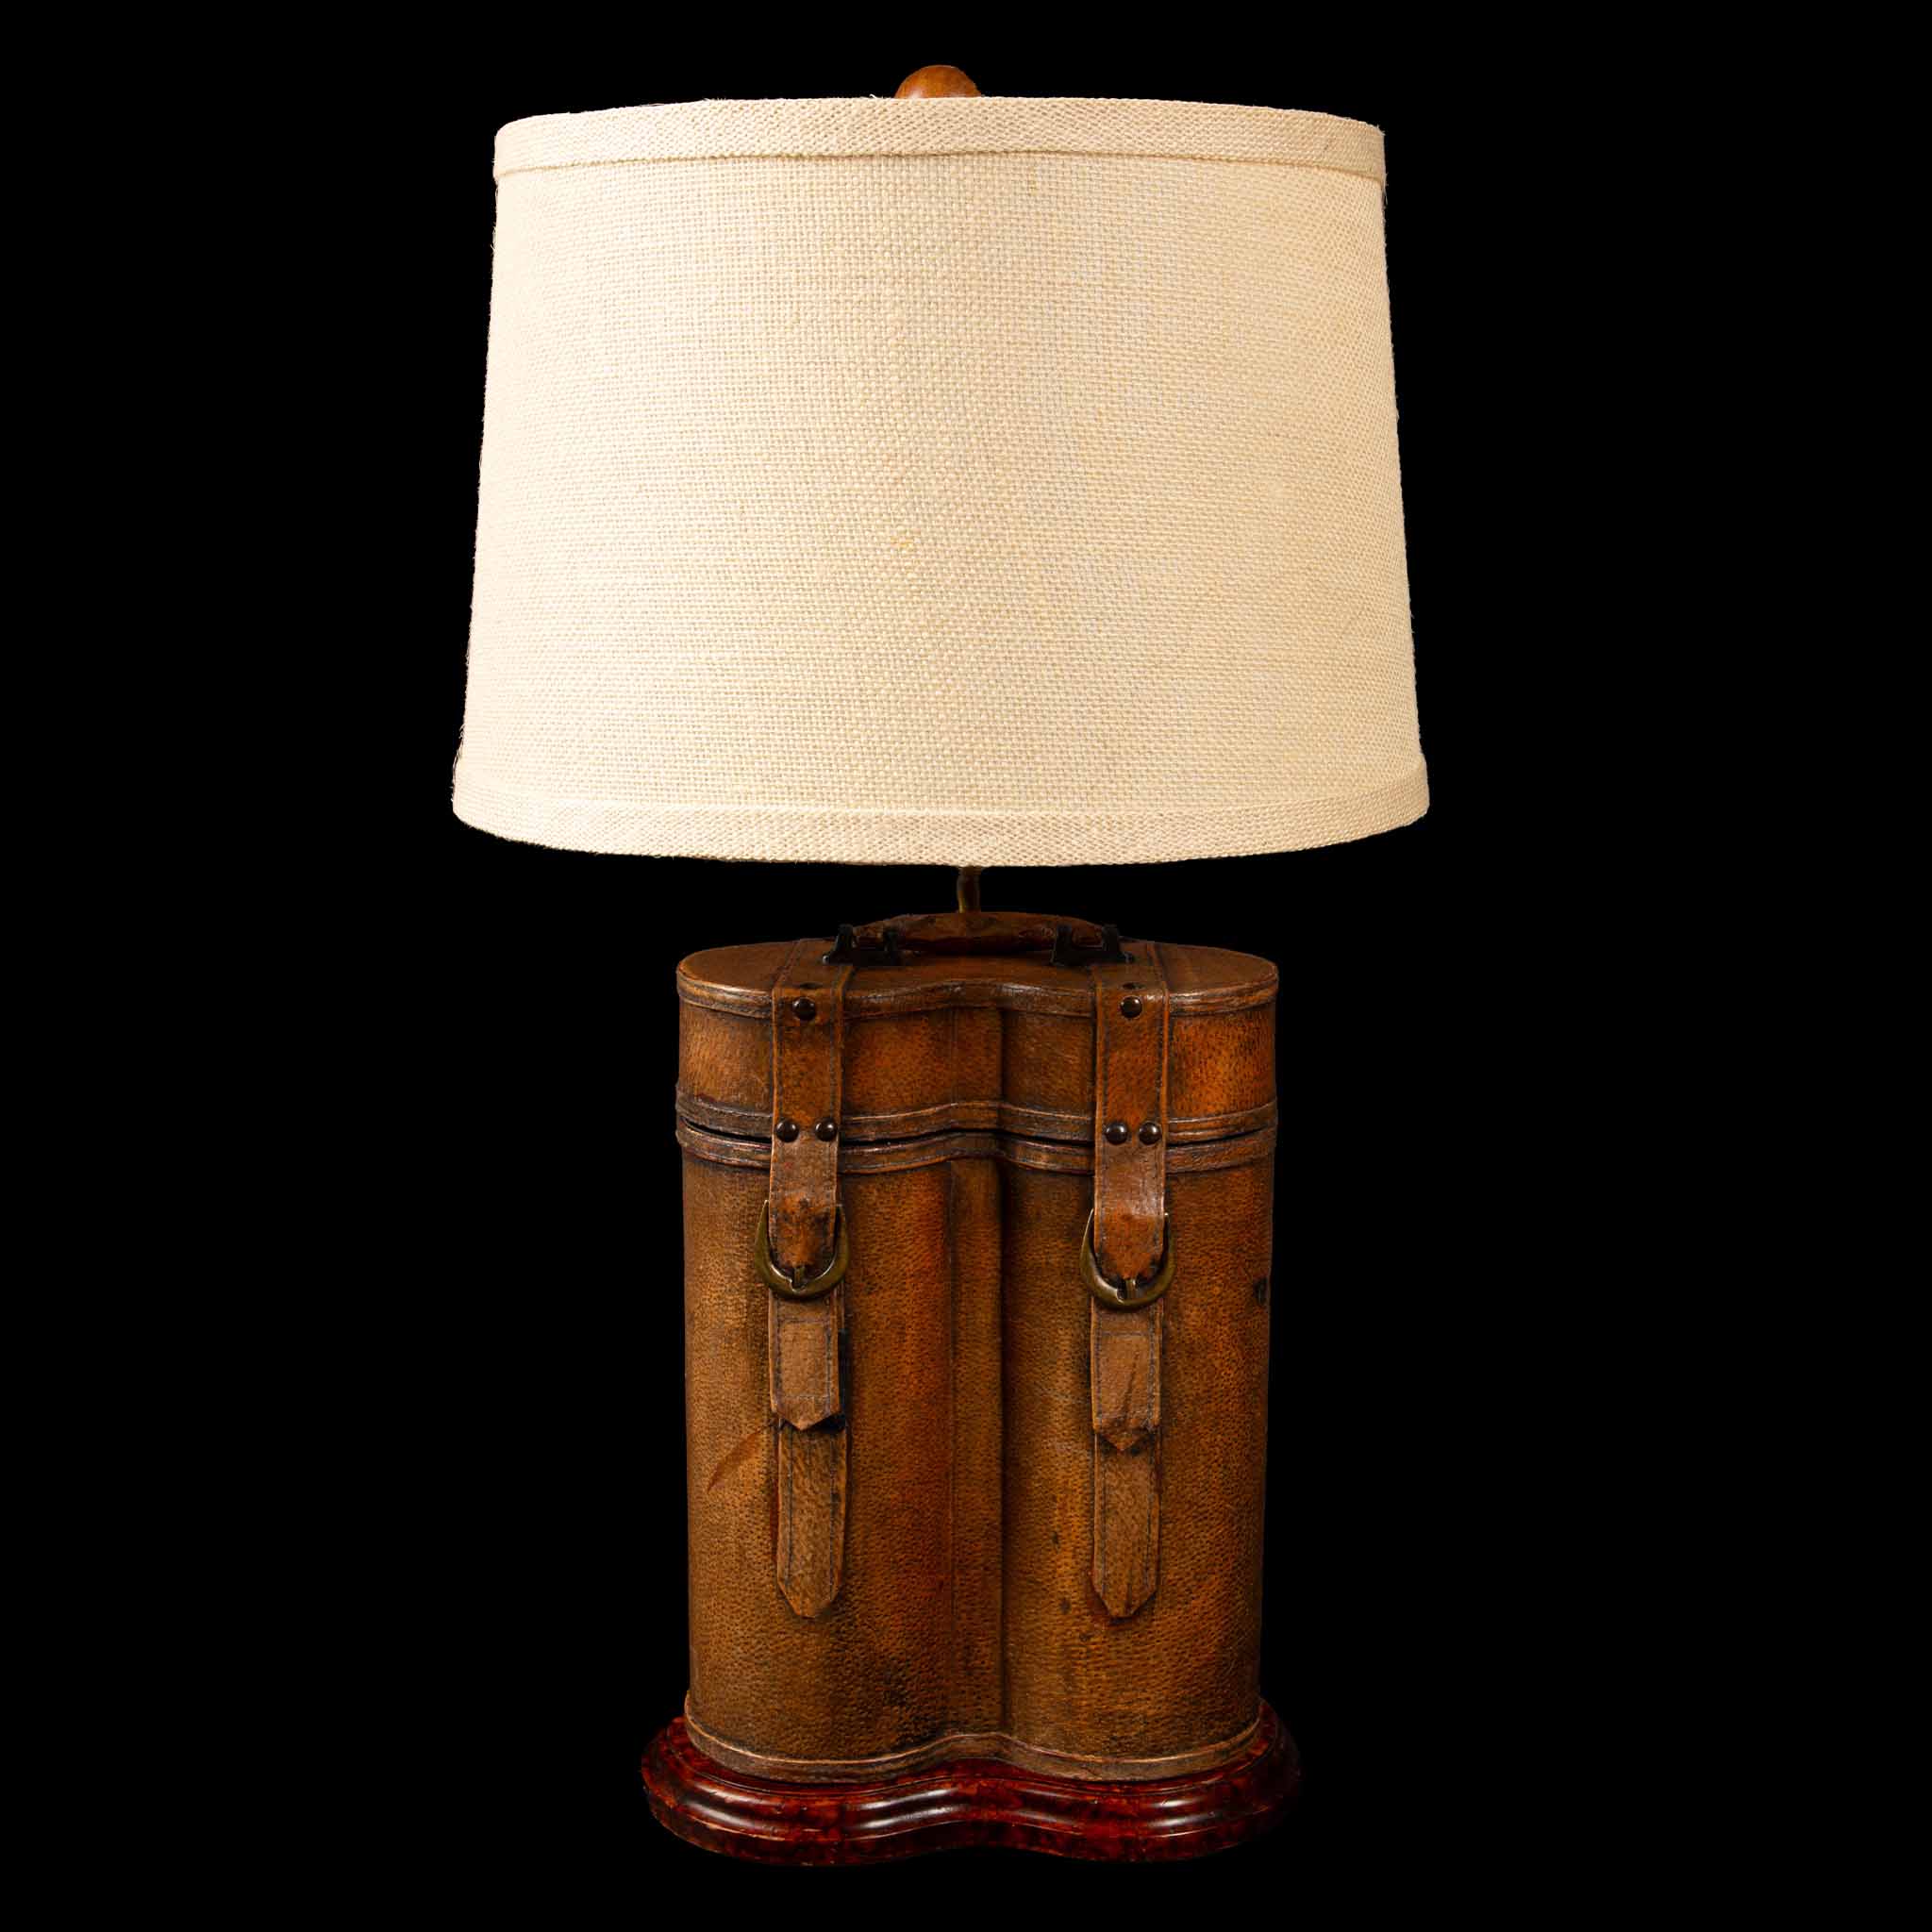 Antique Leather Double Bottle Wine Holder Lamp: 19th Century Elegance